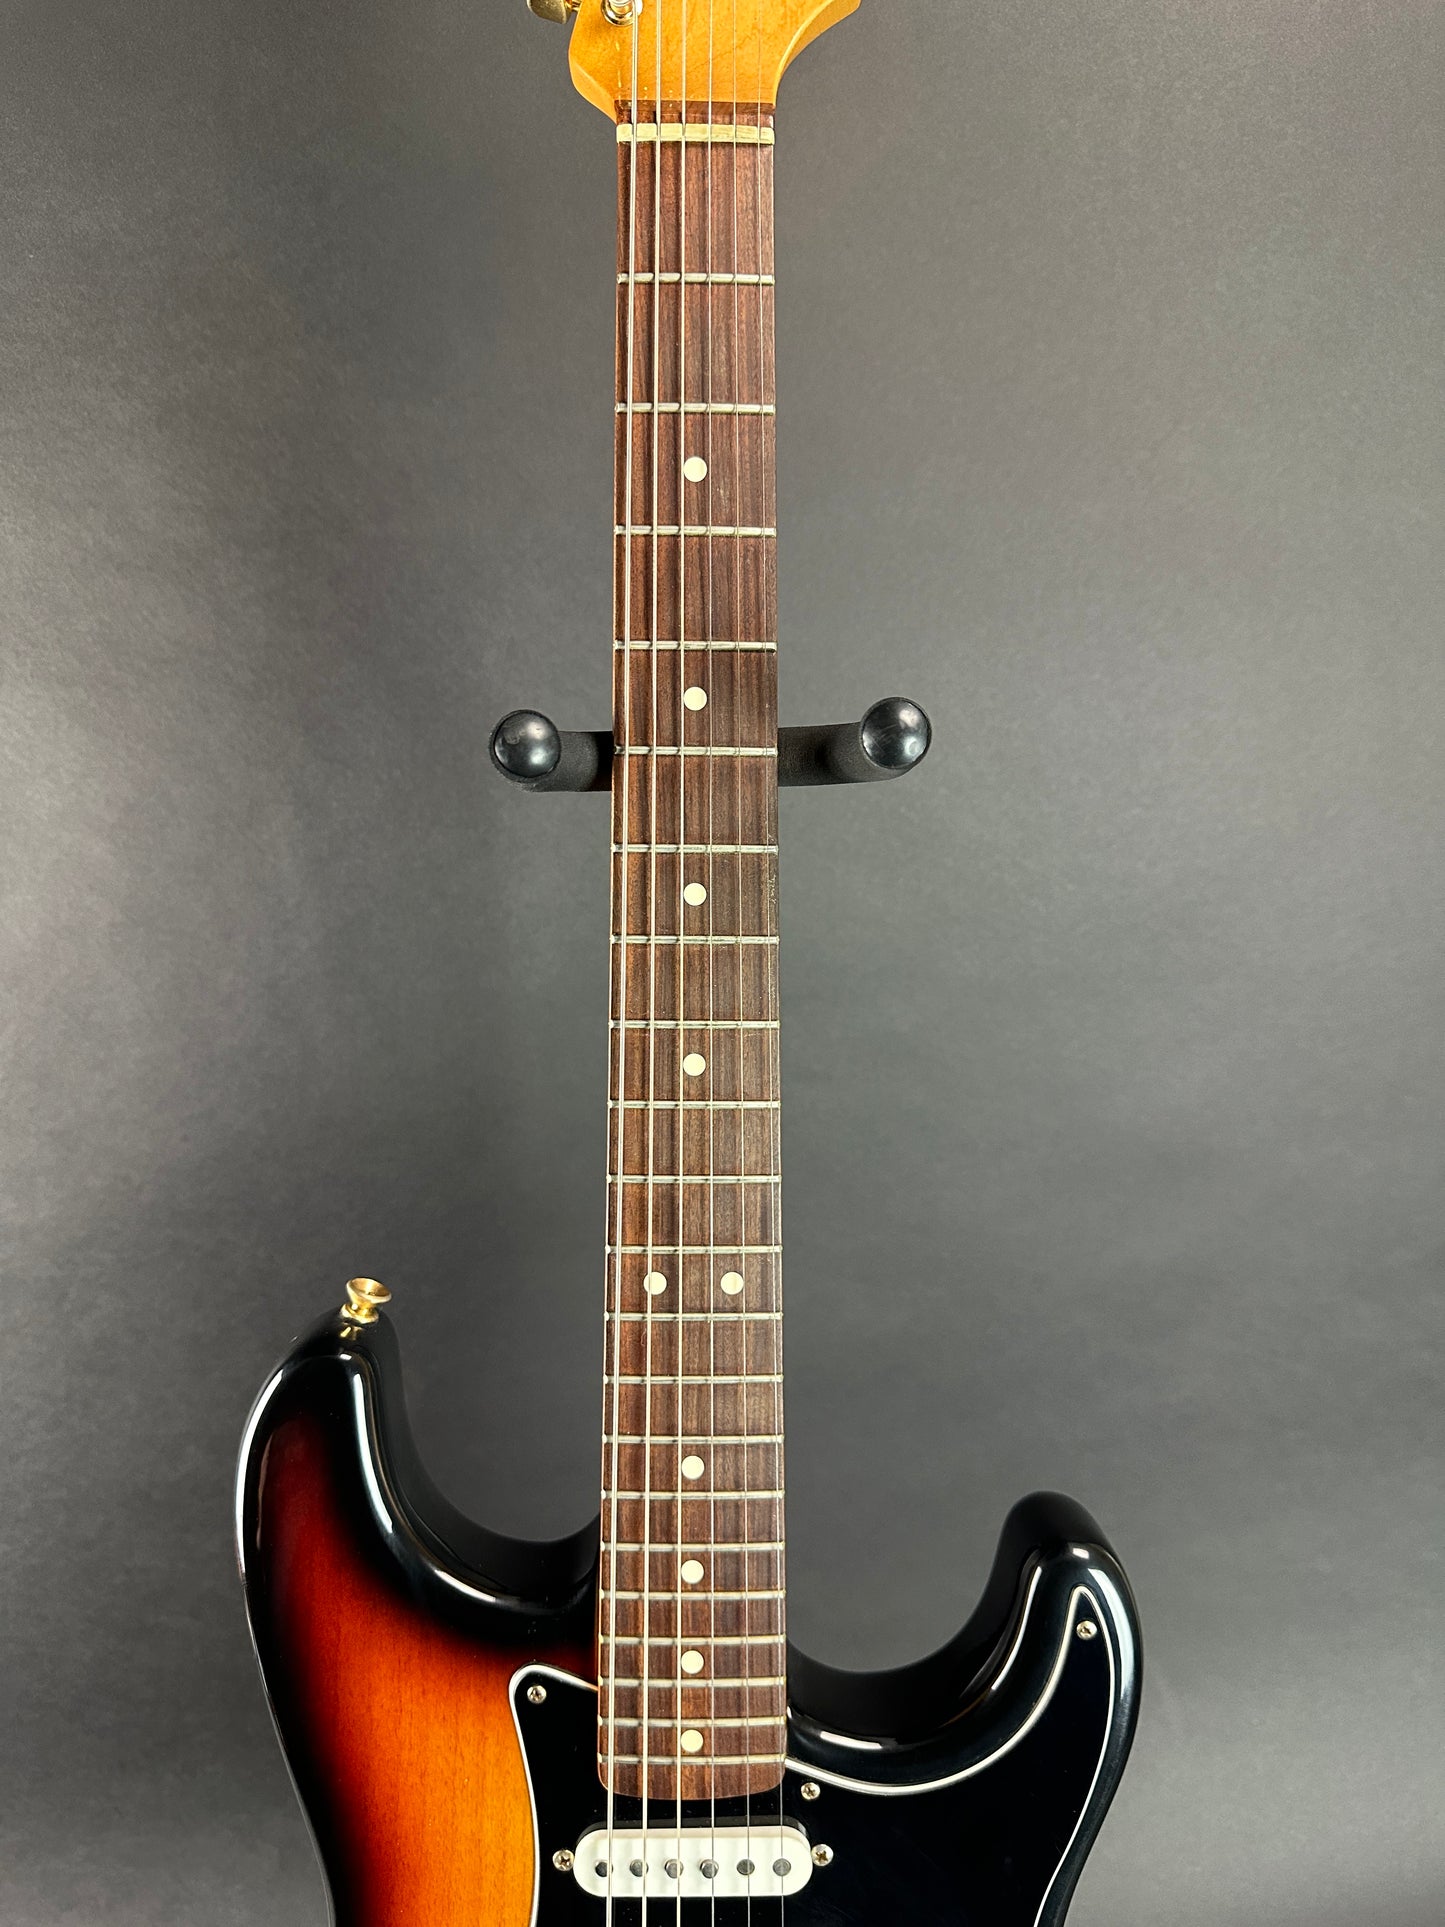 Fretboard of Used 1994 Fender SRV Strat.